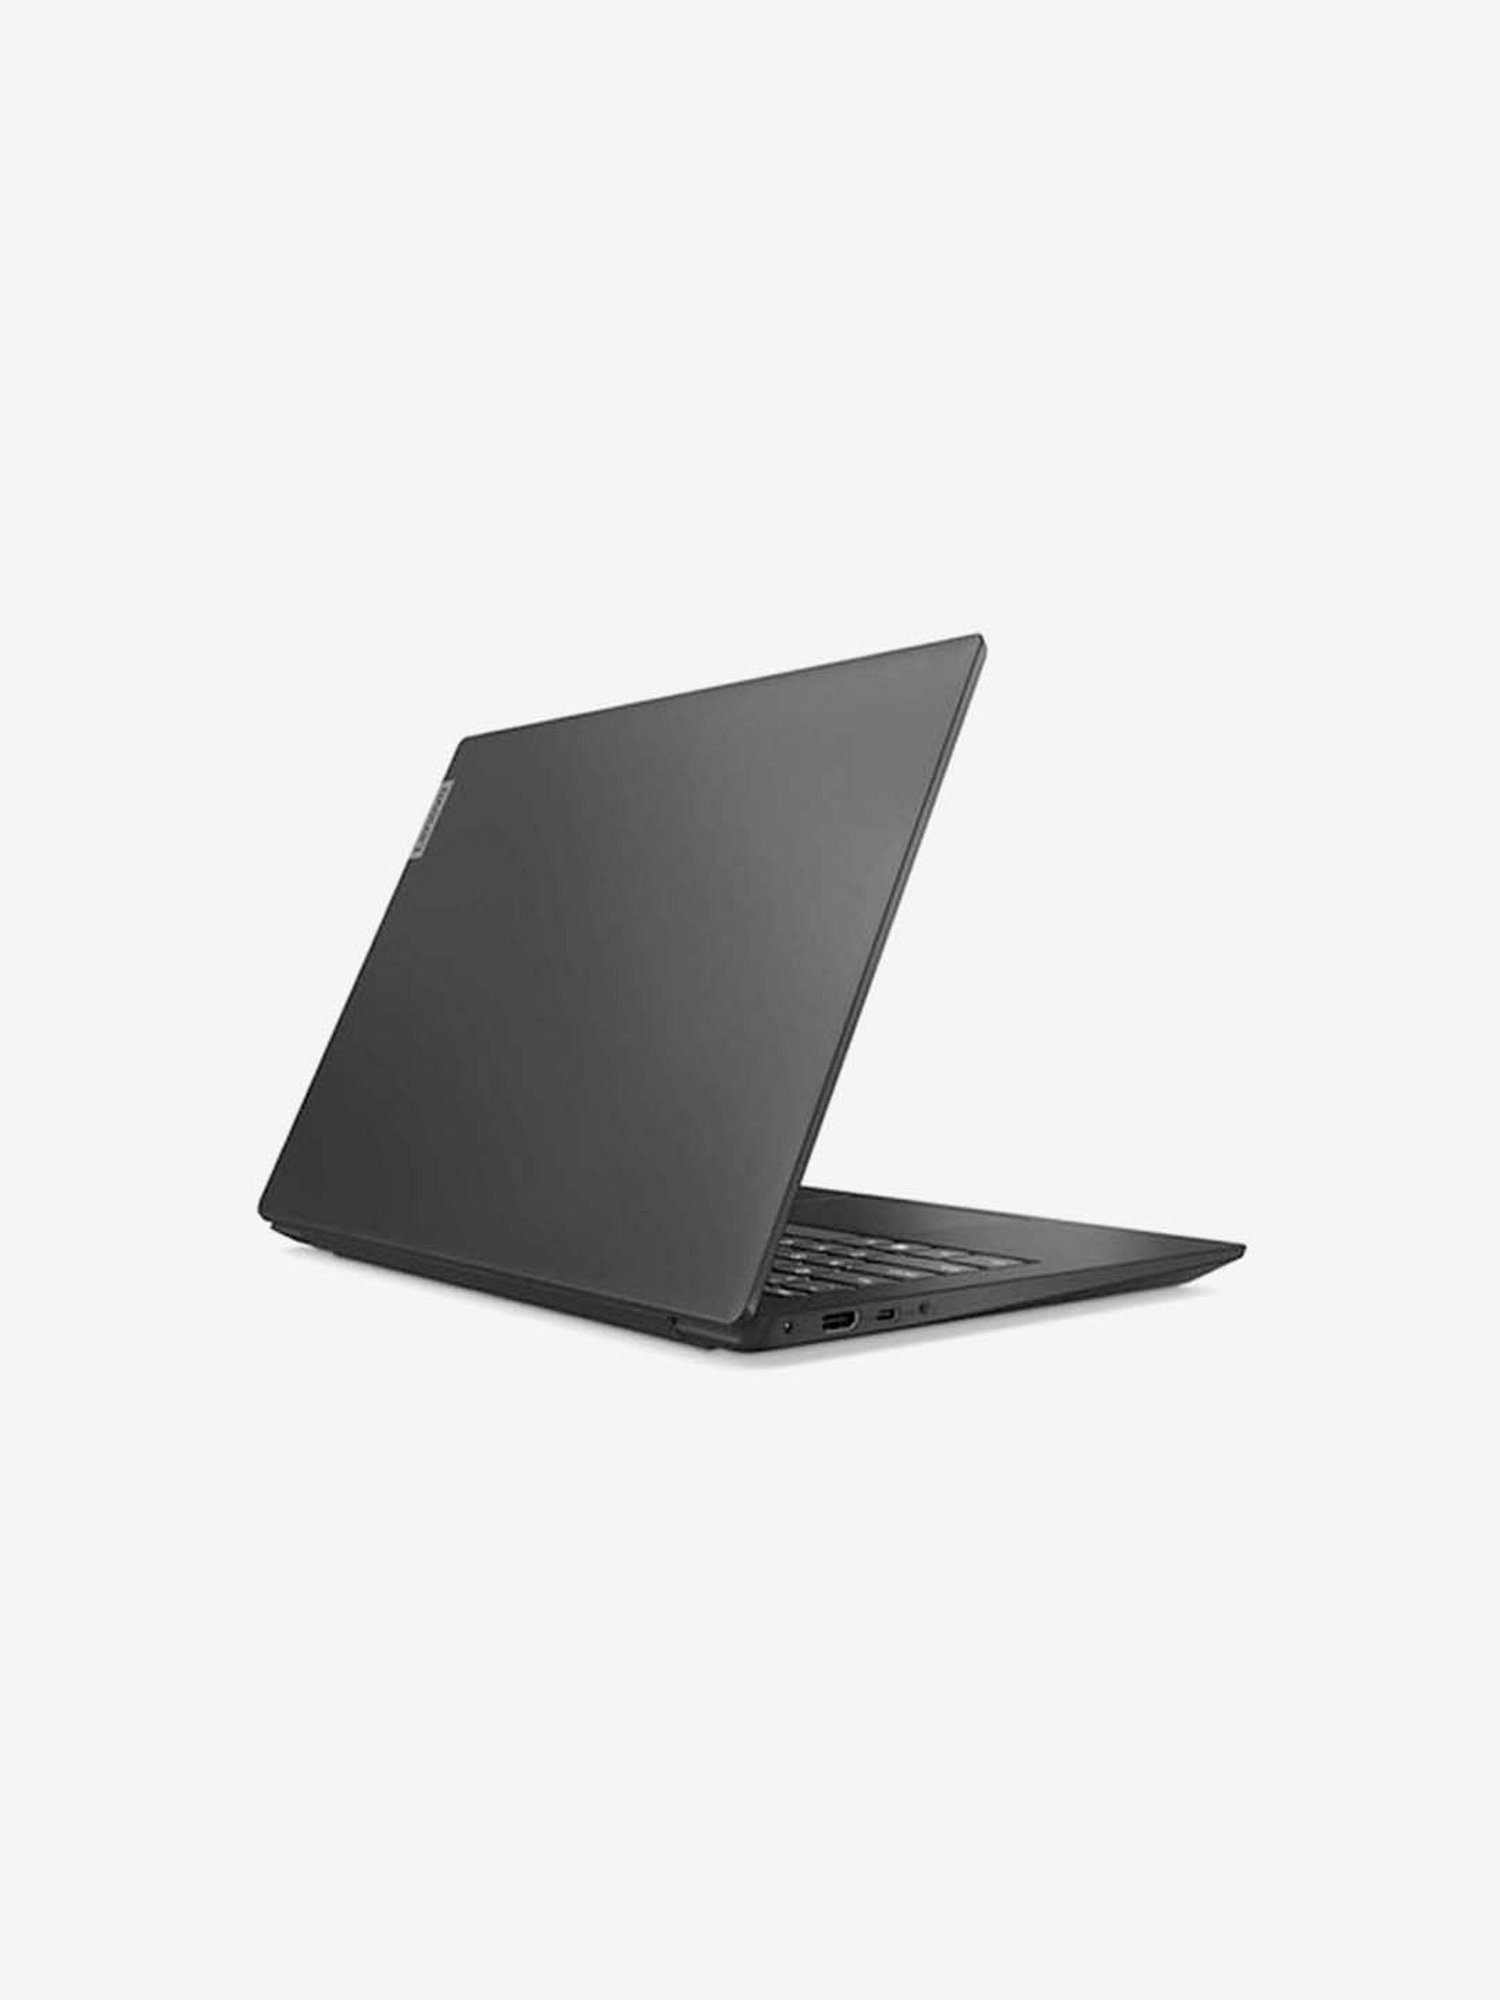 Lenovo Ideapad S340 14iil Laptop 81vv00jcin I3 10th Gen 8gb 1tbhdd 14in W10h Mso Int Graphics Black From Lenovo At Best Prices On Tata Cliq